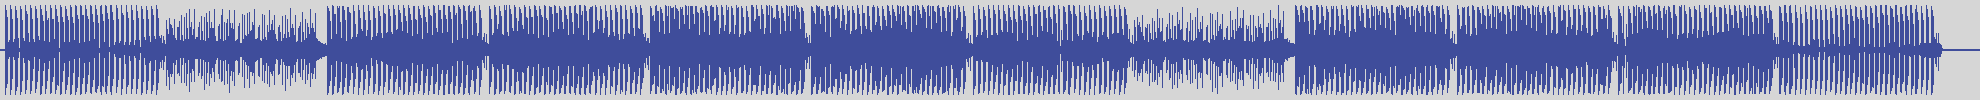 nf_boyz_records [NFY064] Dennis Shultz - Time Break [Sunrise Mix] audio wave form